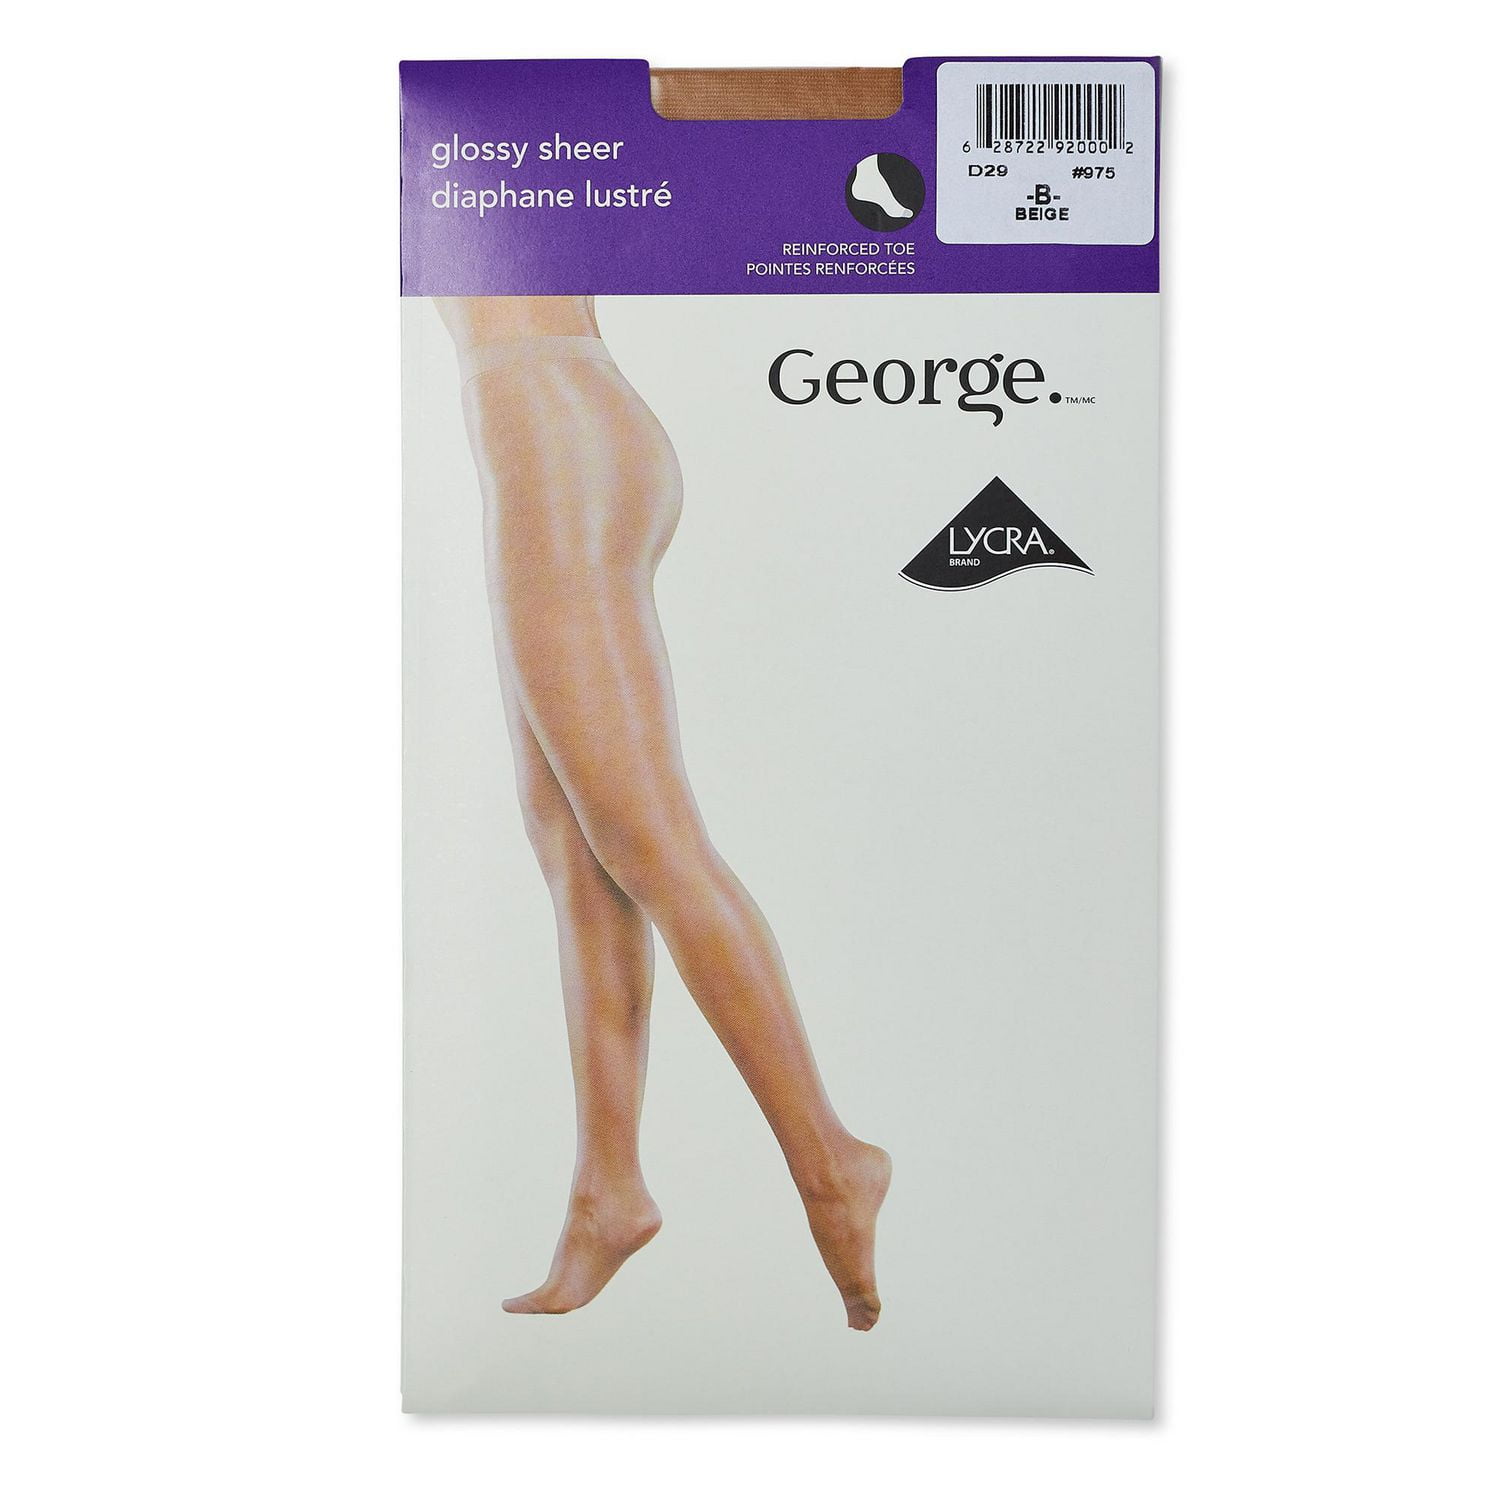 George Woman Silky Sheer Control Top Pantyhose Queen Sz Off Black 2 Packs